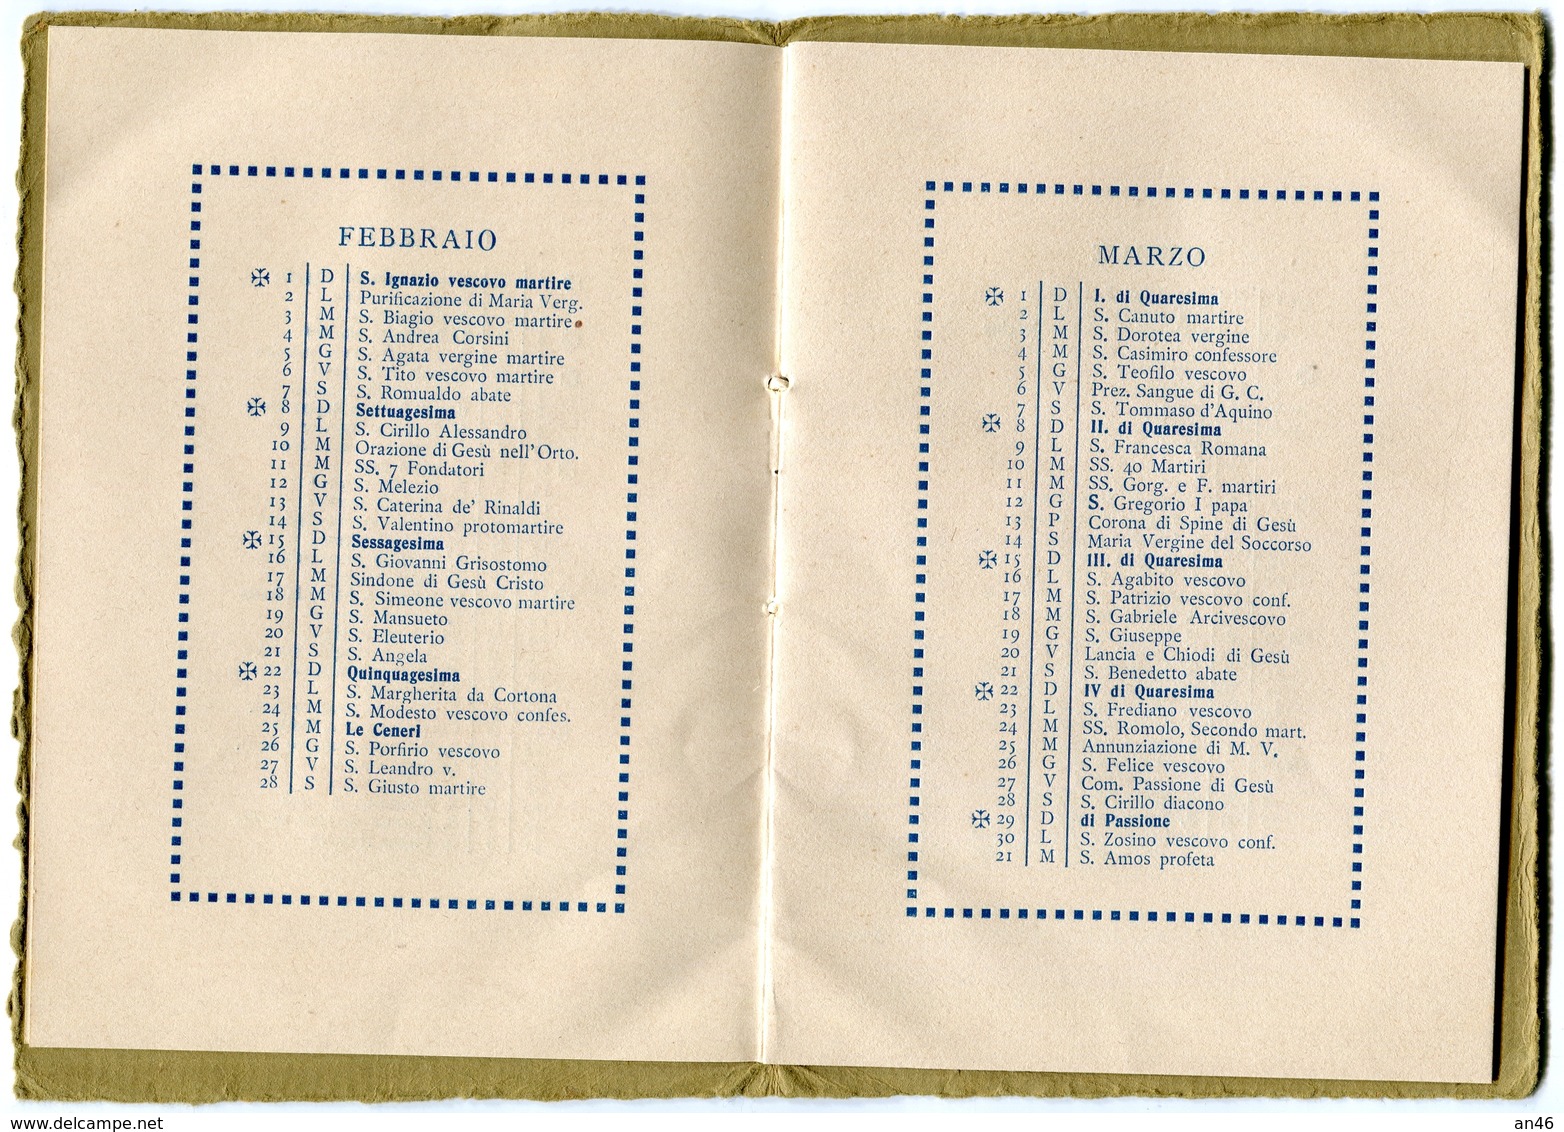 Calendario-Calendarietto-Calendrier-Kalender-Calendar-"Regia Accademia Navale 1914" Integra E Originale 100% - Grand Format : 1901-20